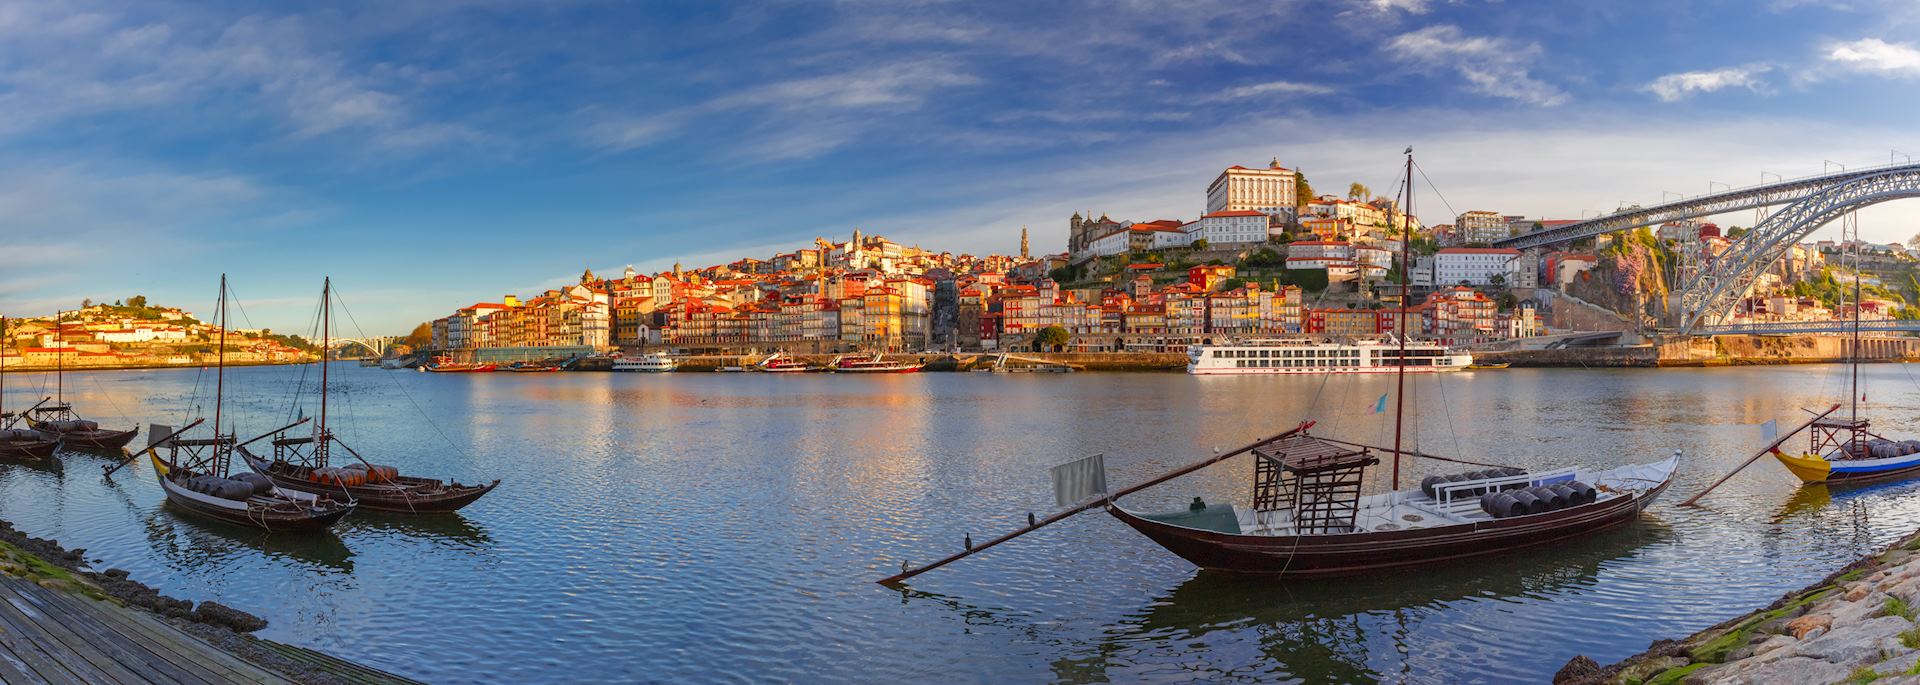 Rabelo boats, Douro River, Porto